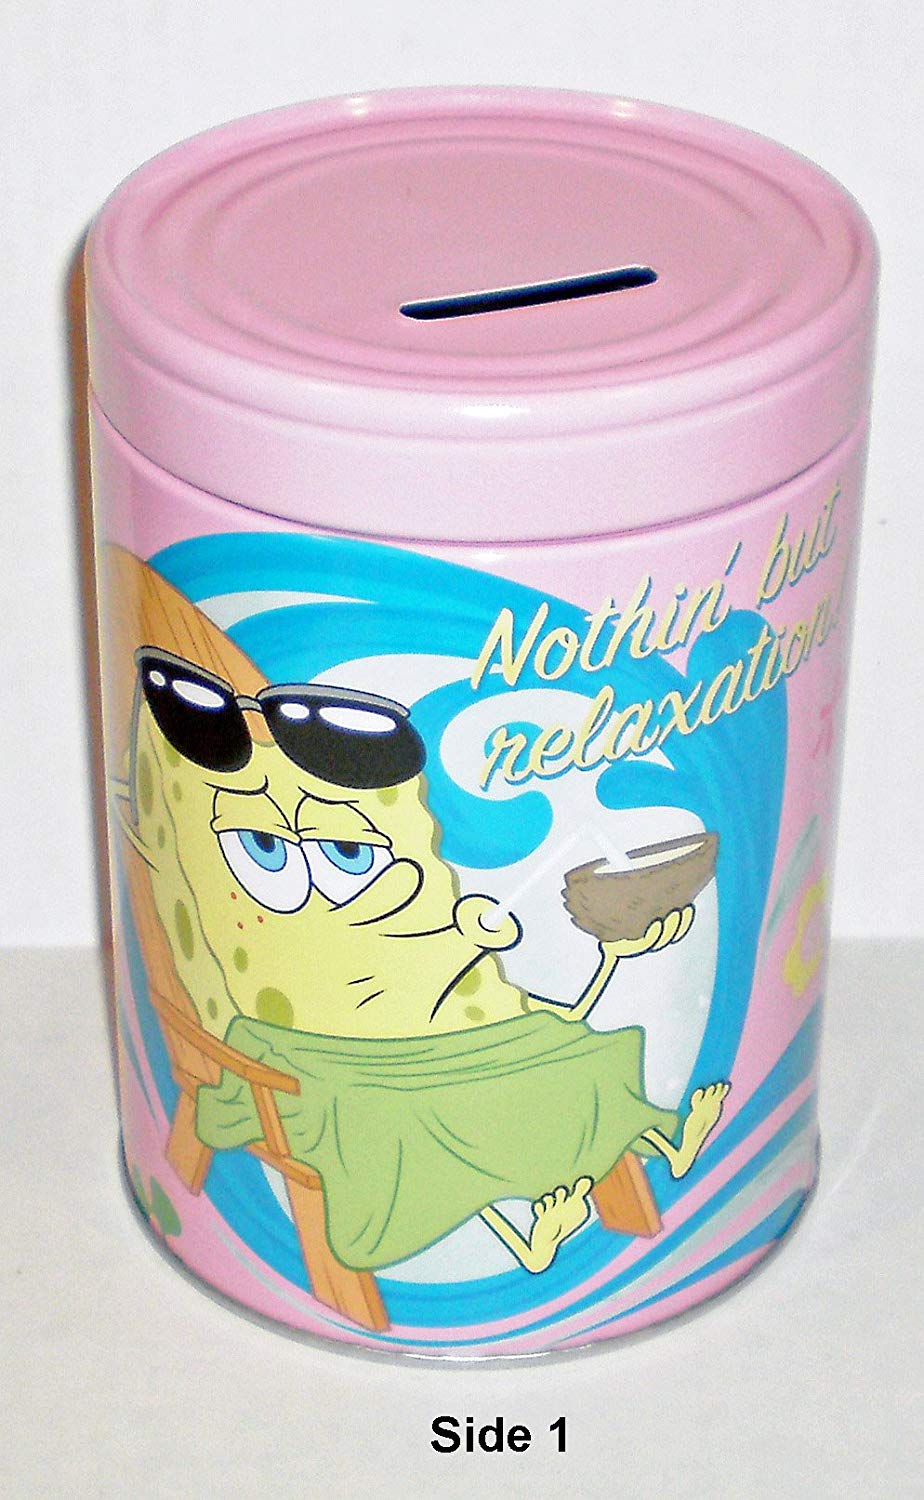 Spongebob Squarepants "Nothing But Relaxation" Round Tin Bank